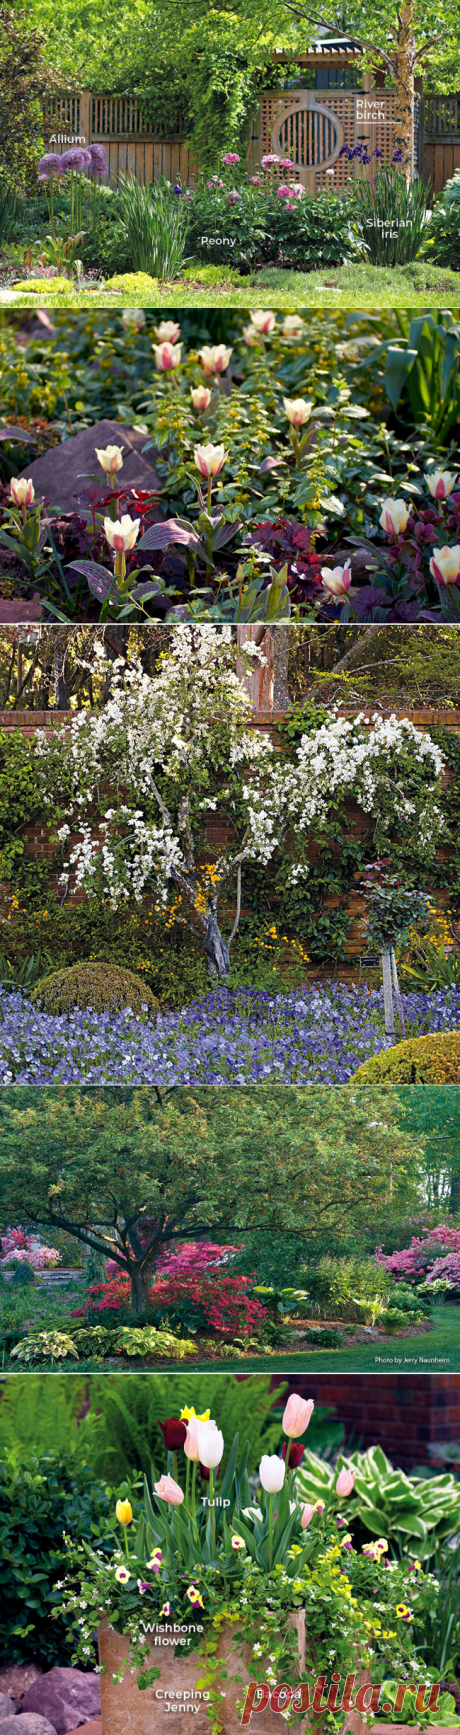 6 ways to create a beautiful spring garden | Garden Gate